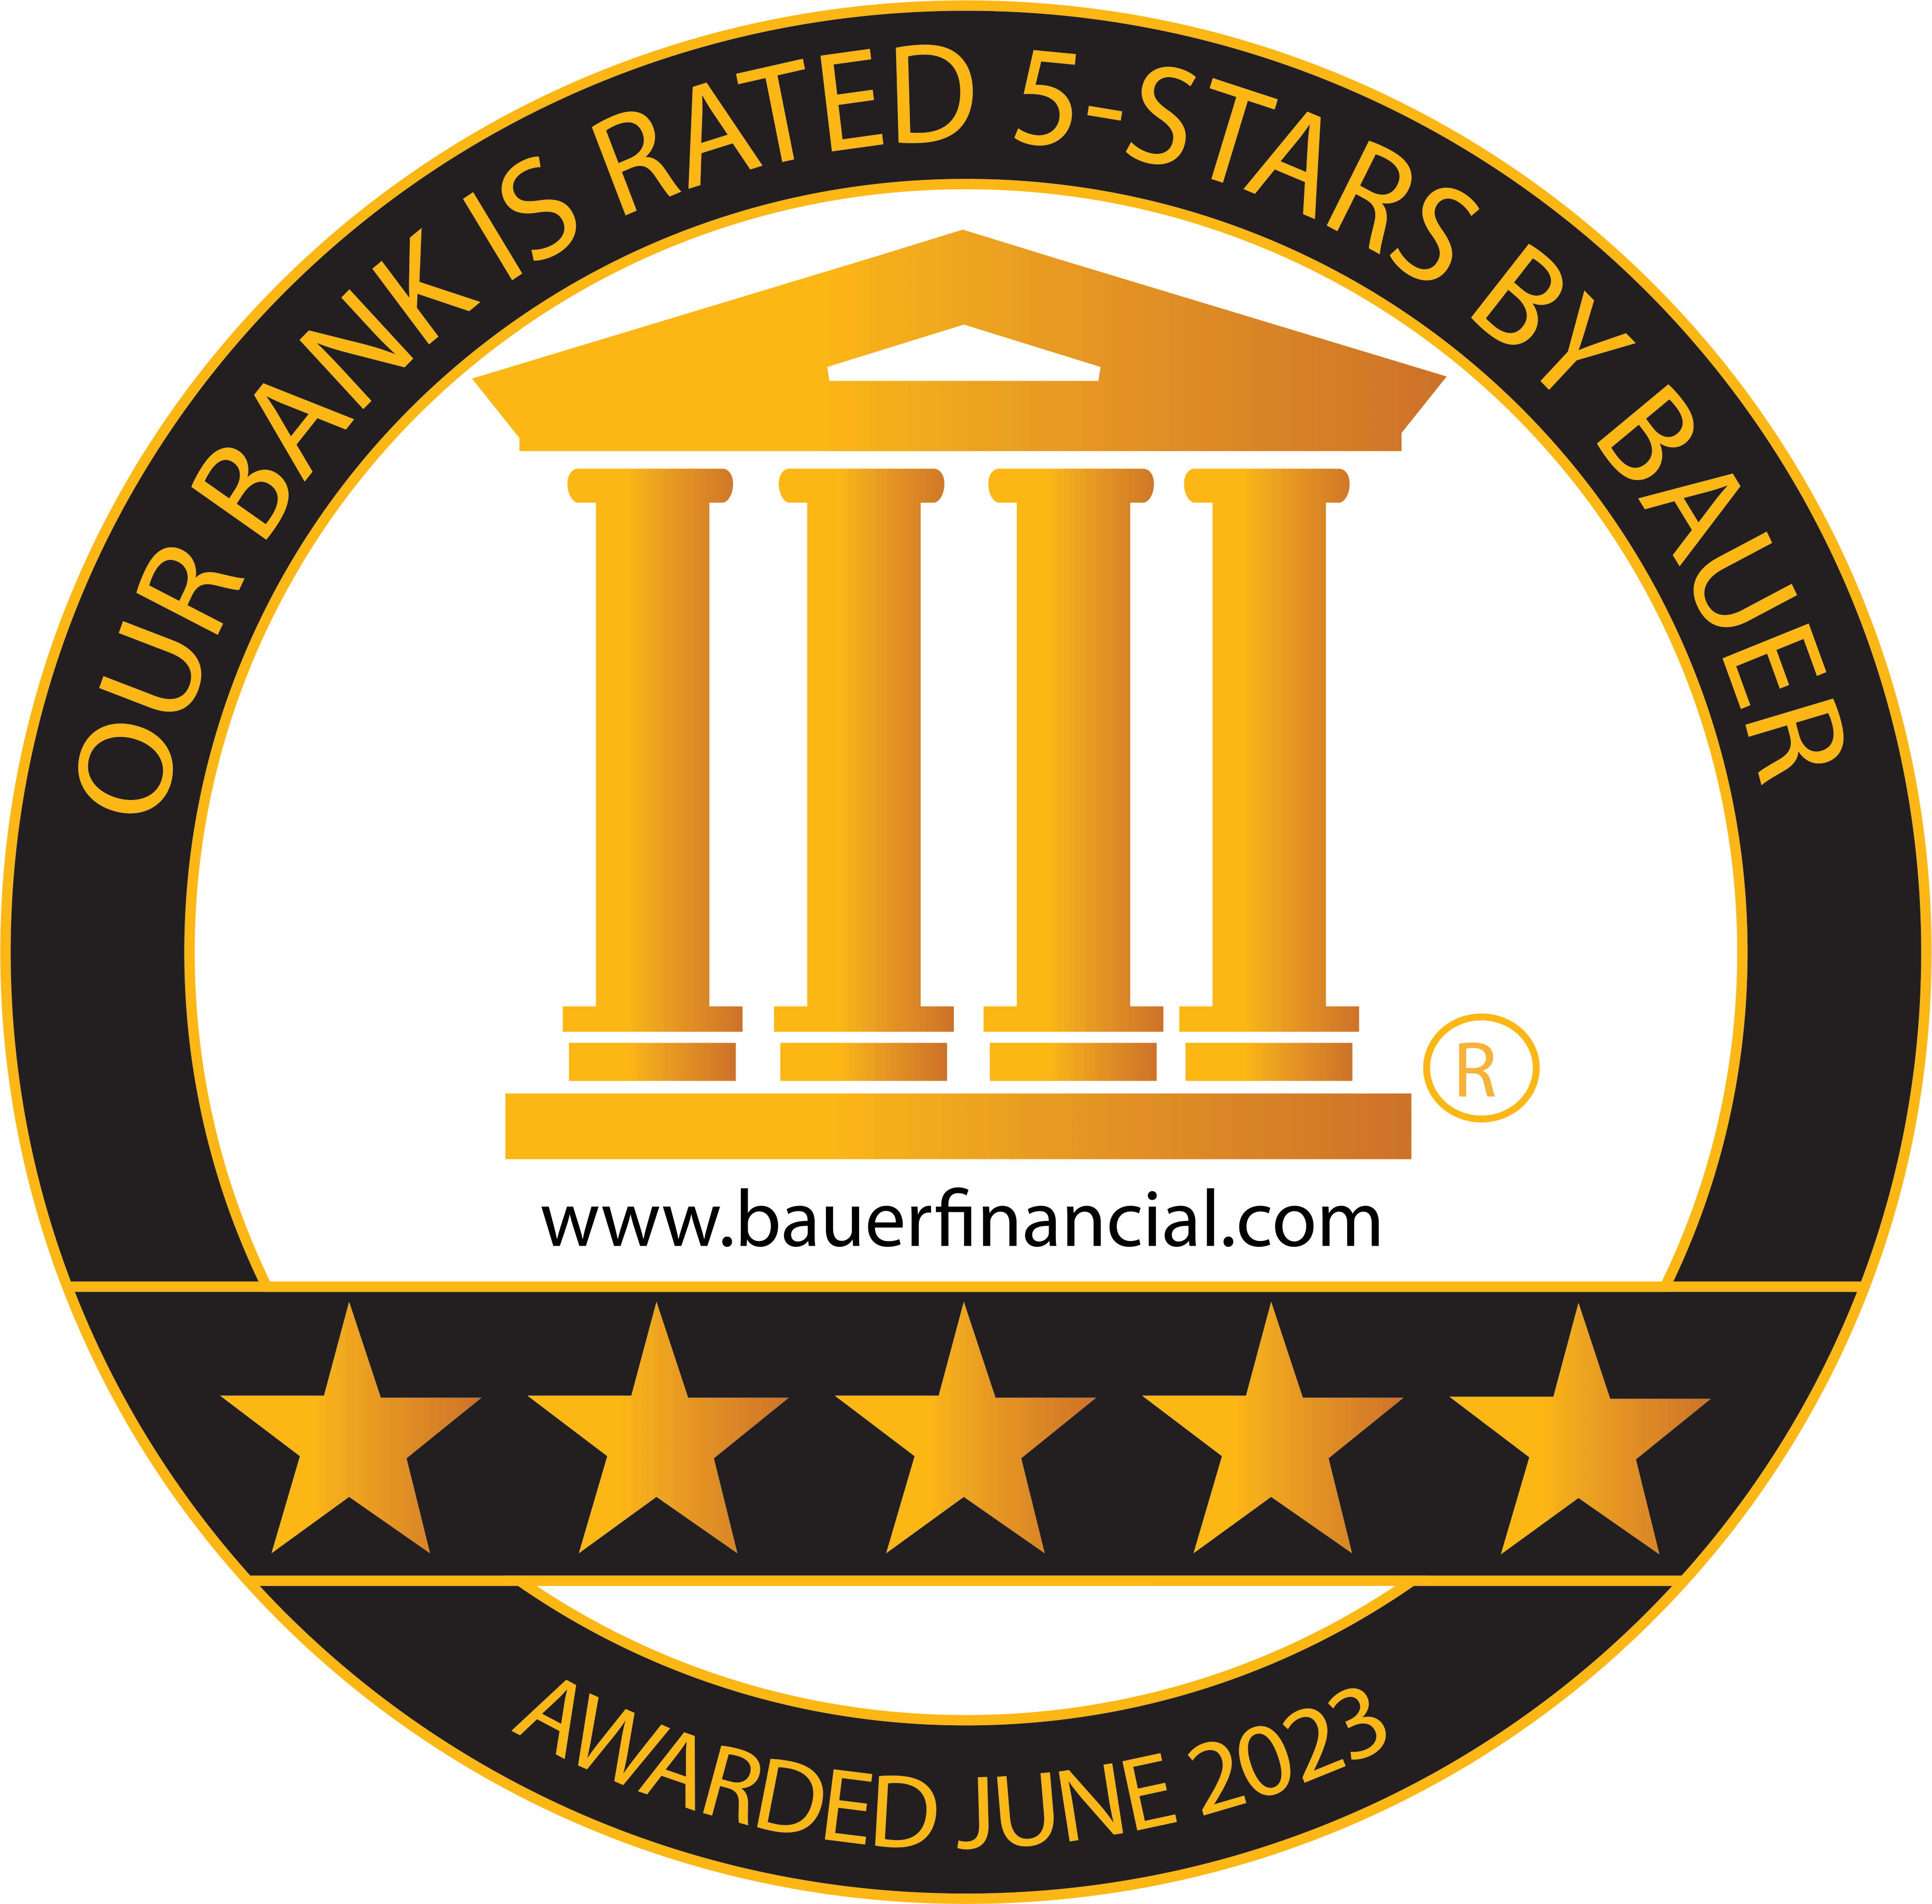 Bauer Financial 5-Star Rating Logo